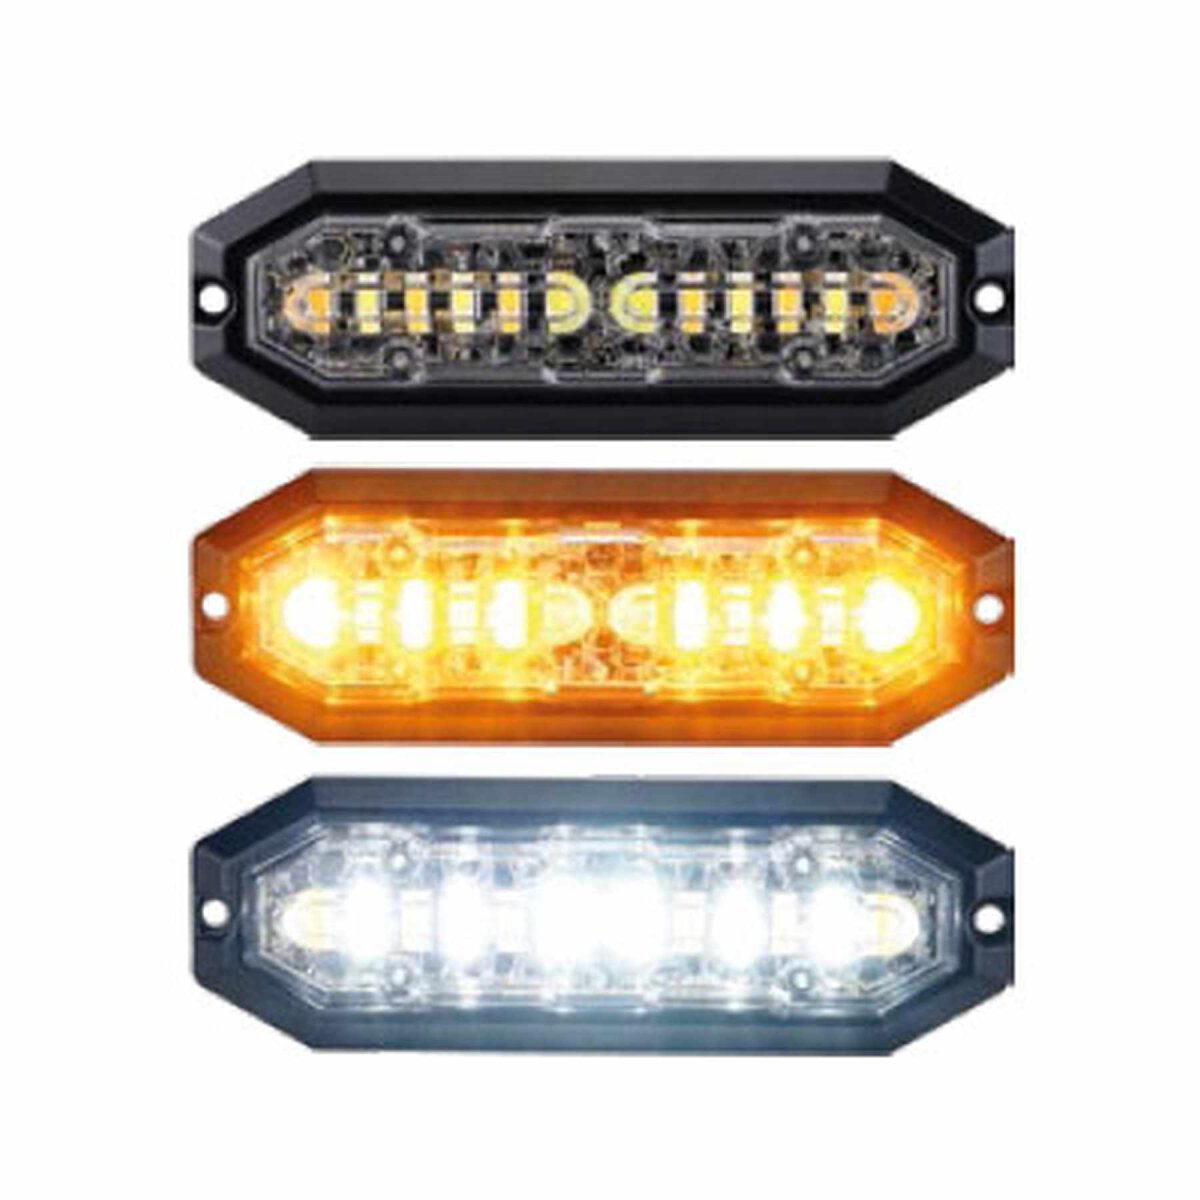 STRANDS® LIGHTING DIVISION LED-Warnblitzleuchte DUO, mit 12 LEDs- Str,  80,99 €